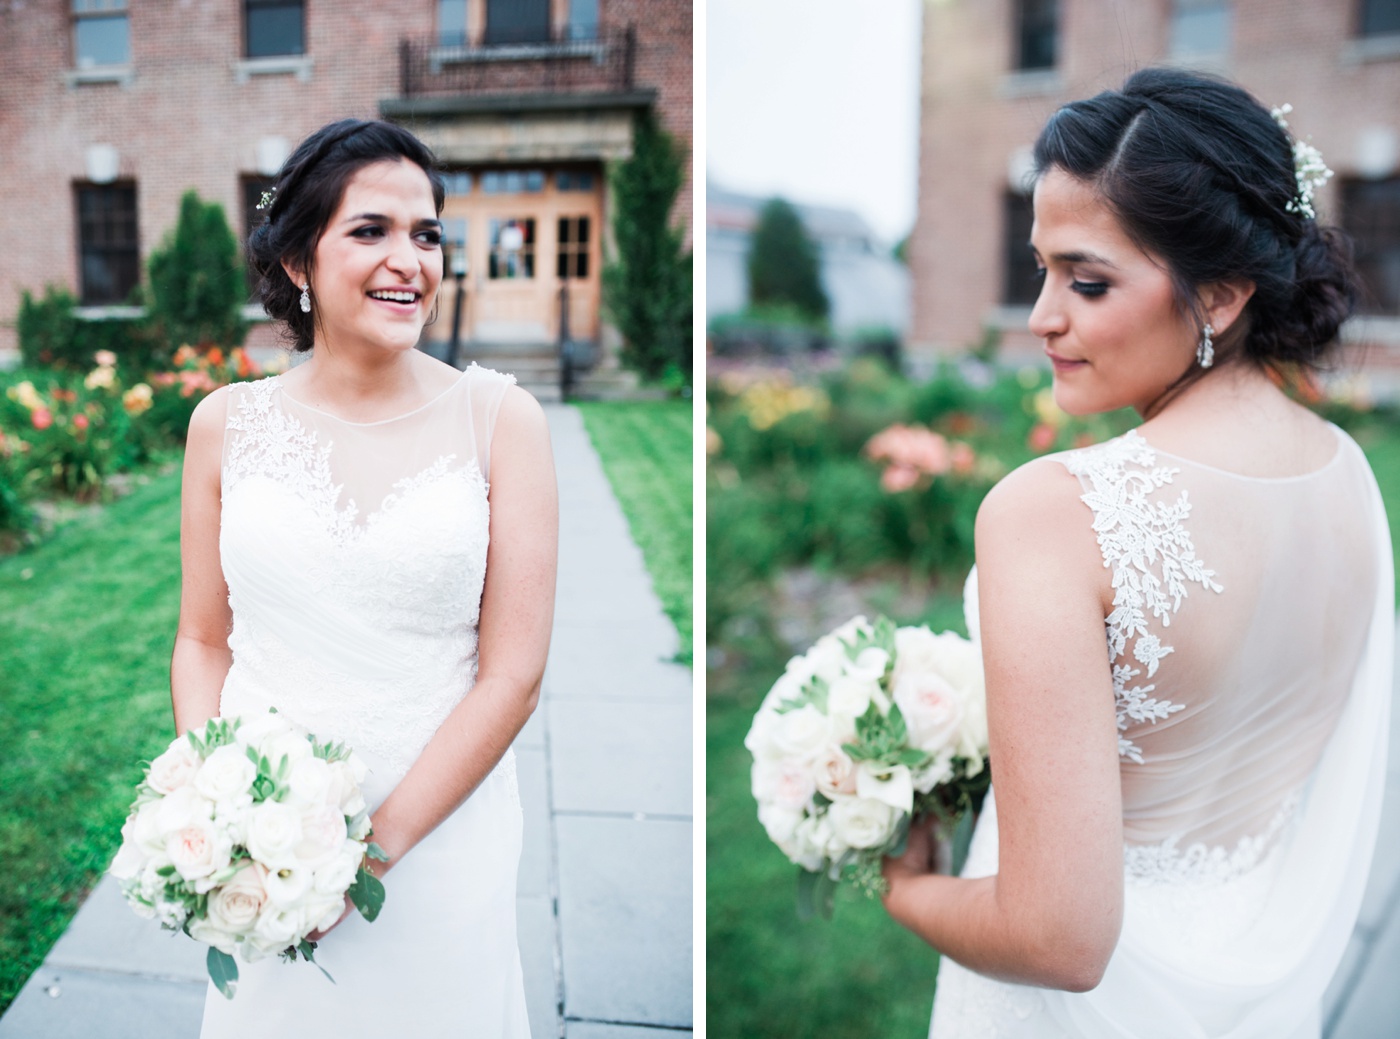 Daniela + Franco - Celebrate at Snug Harbor Wedding - Staten Island New York Wedding Photographer - Alison Dunn Photography photo